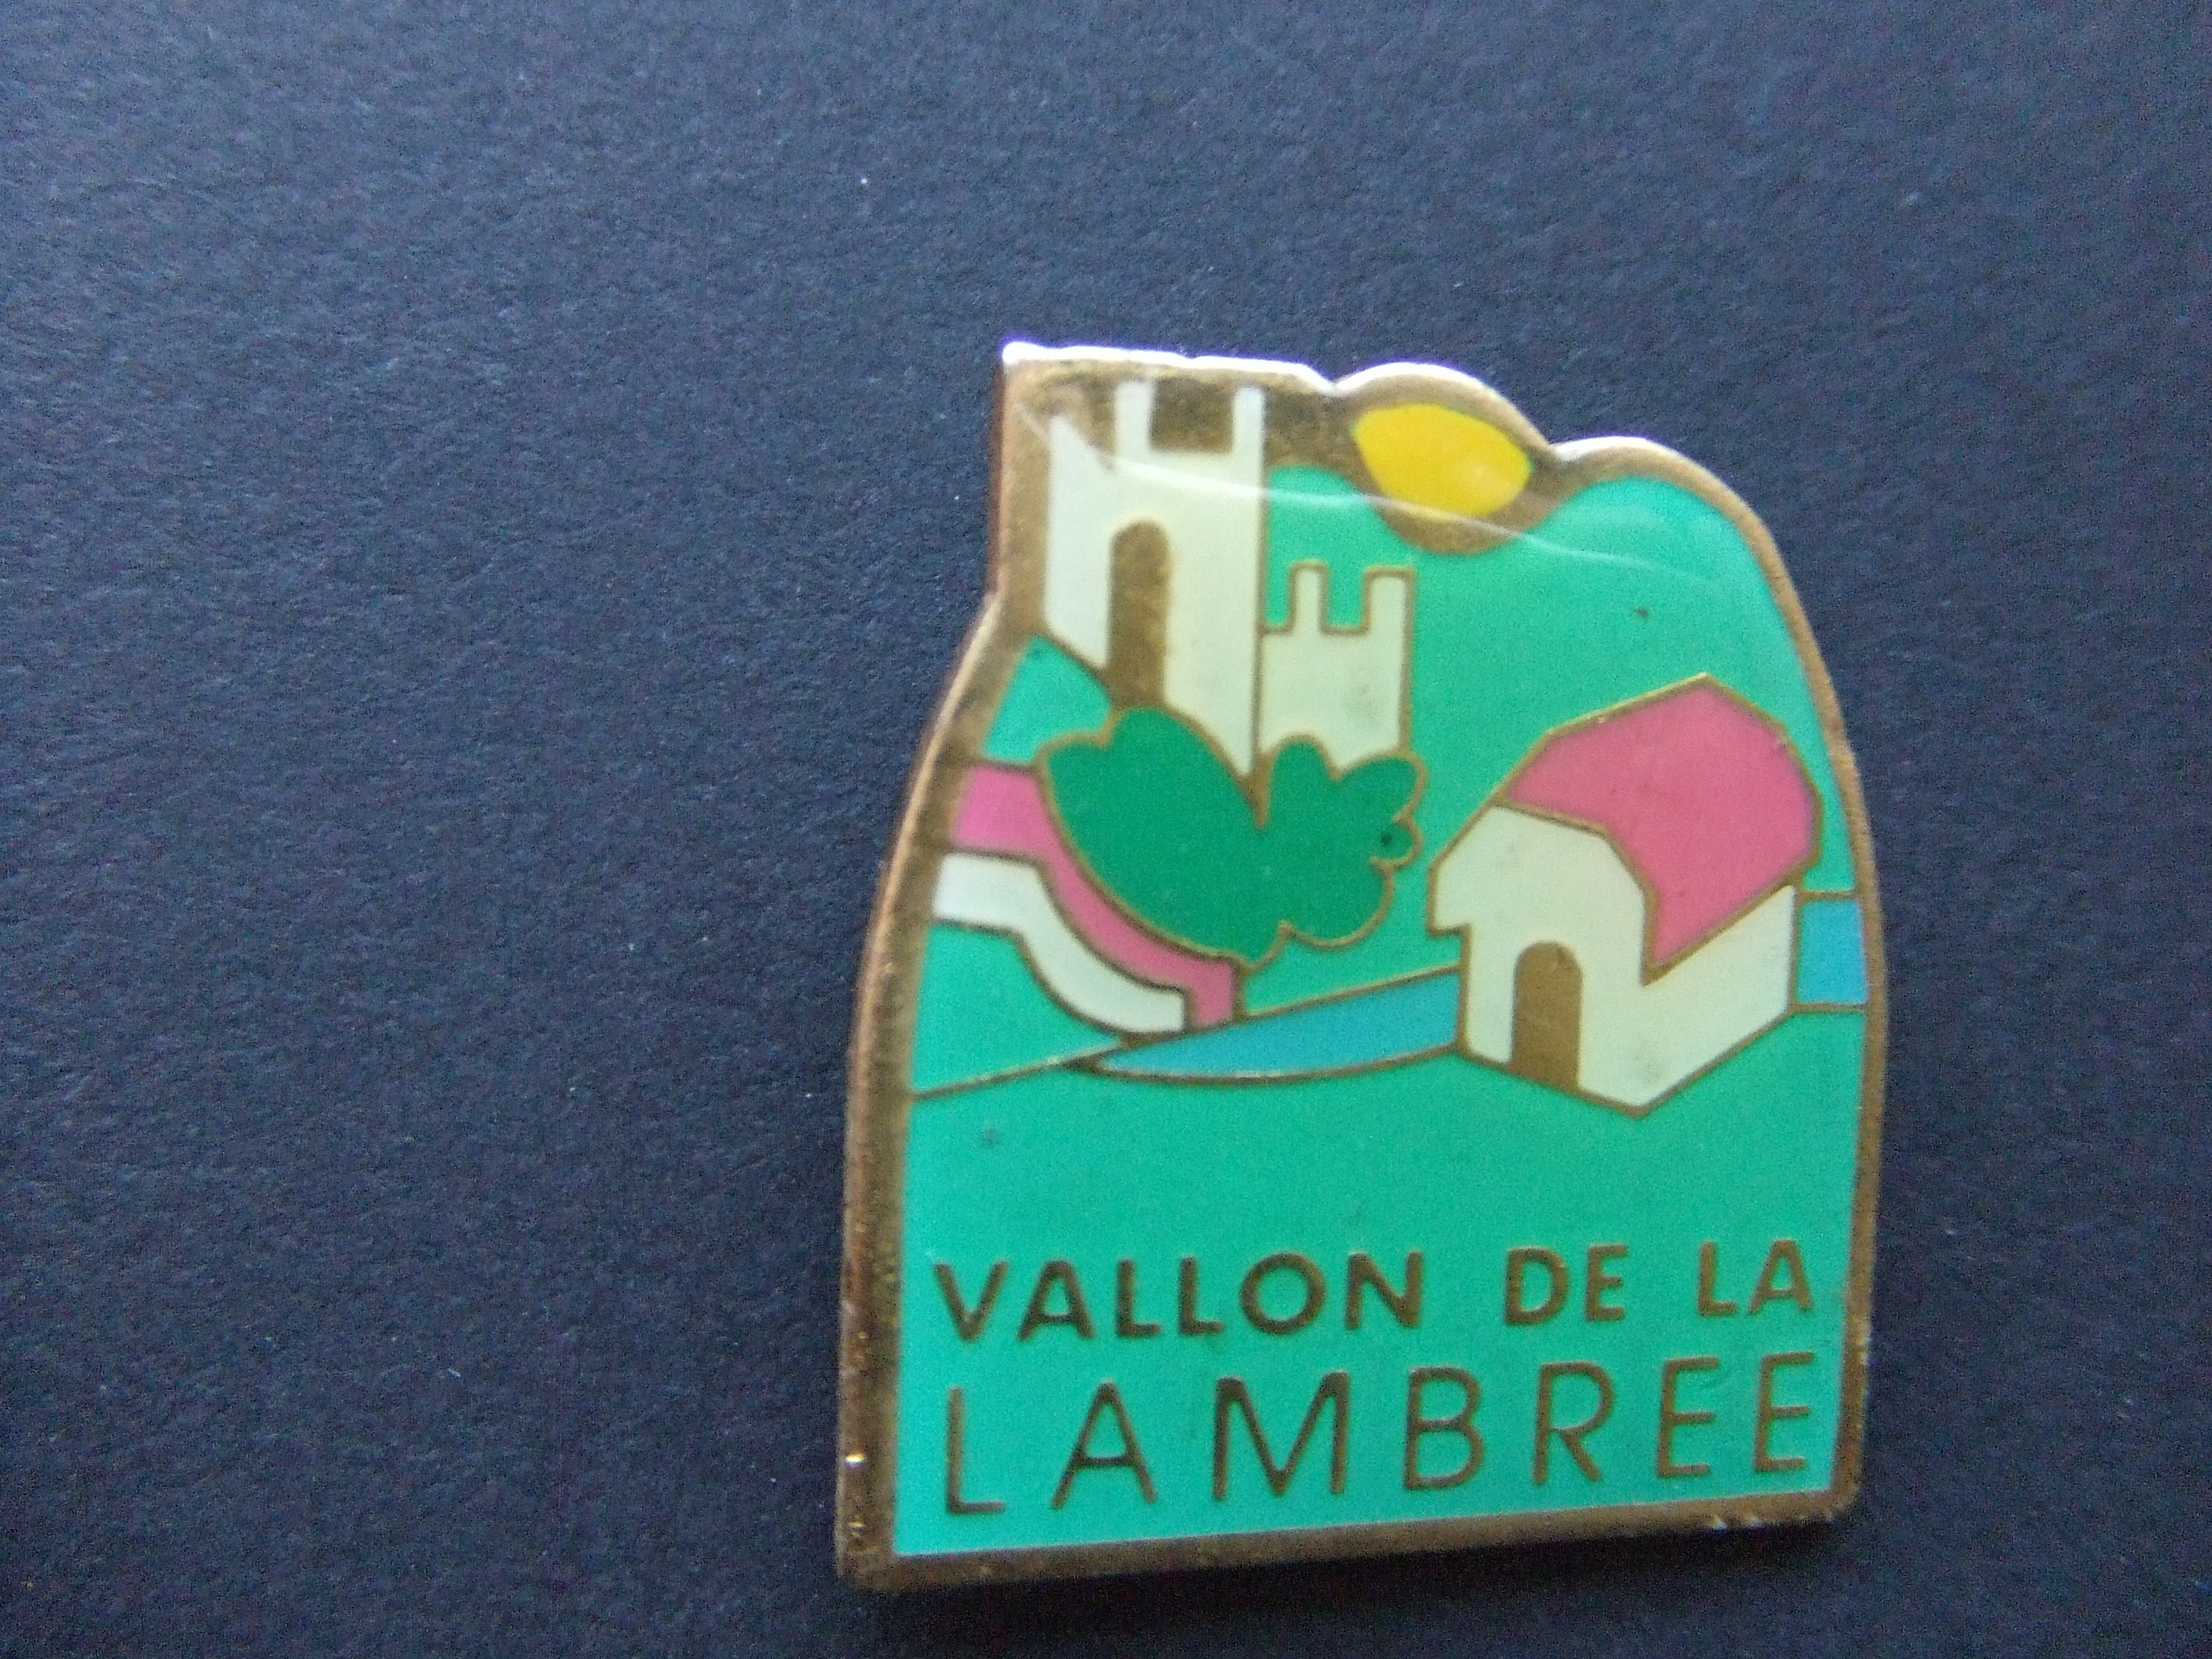 Vallon de la Lambrée gebied in Frankrijk